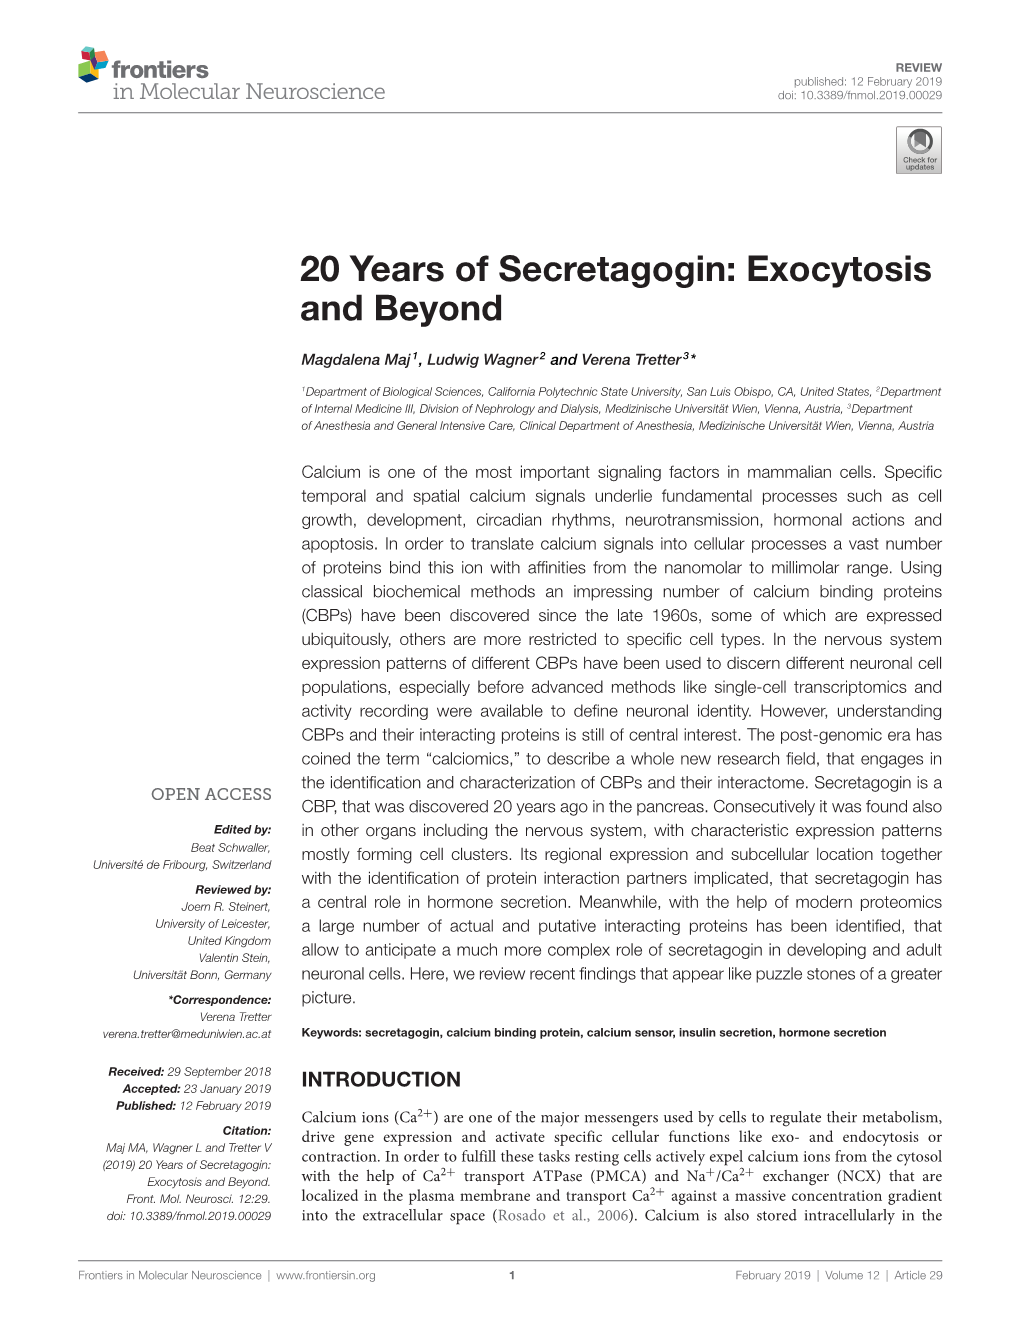 20 Years of Secretagogin: Exocytosis and Beyond